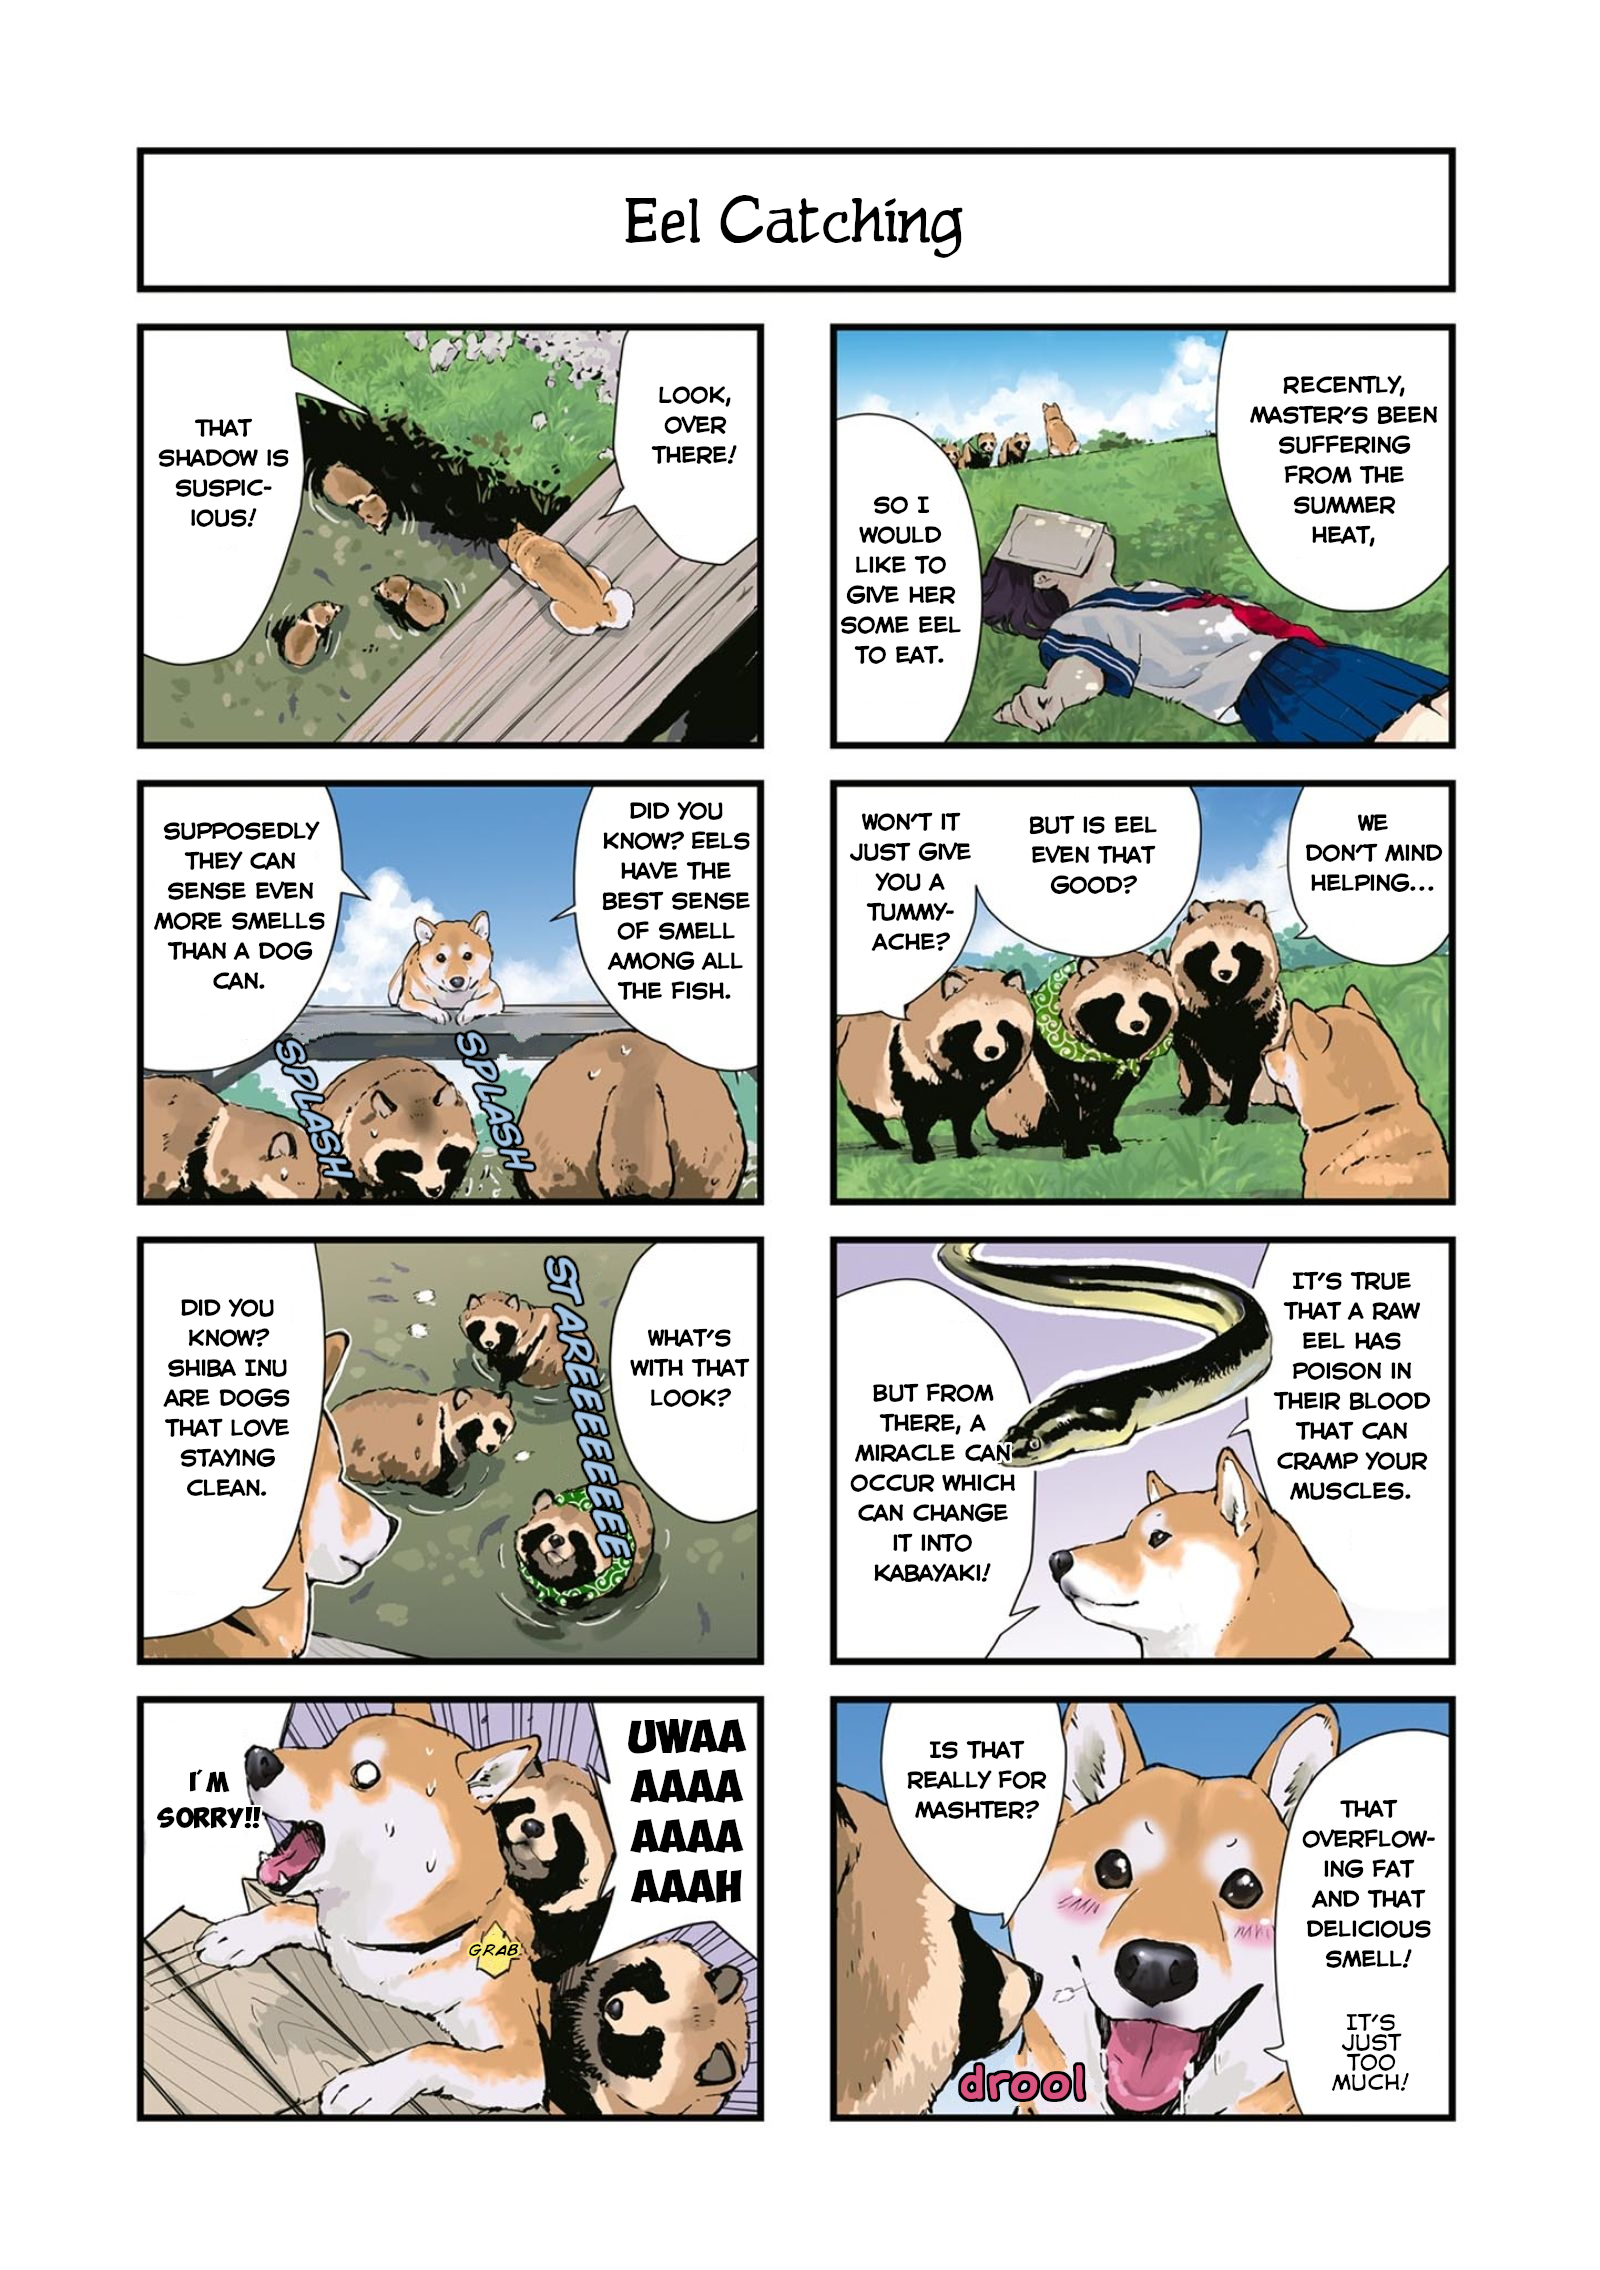 Roaming The Apocalypse With My Shiba Inu - Page 2